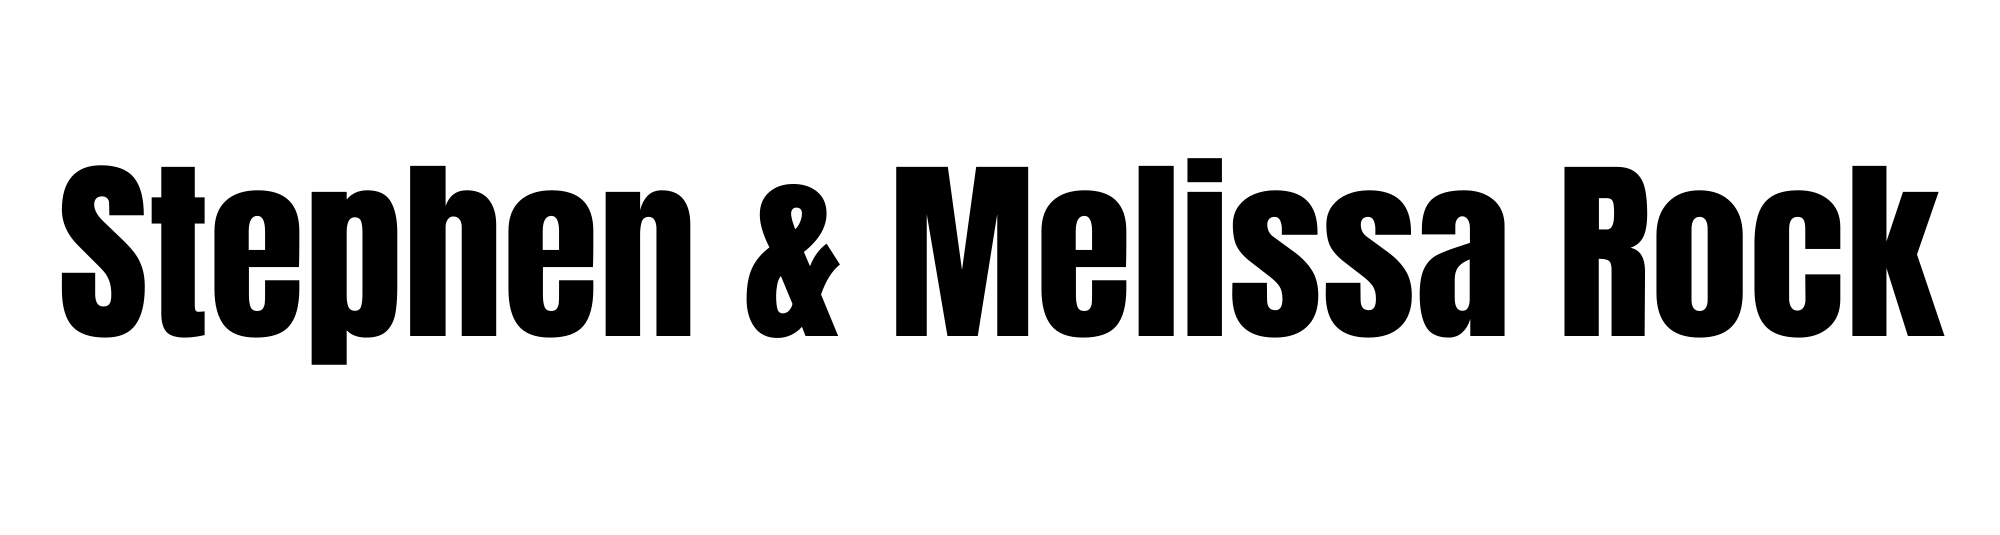 Stephen Melissa Rock Logo